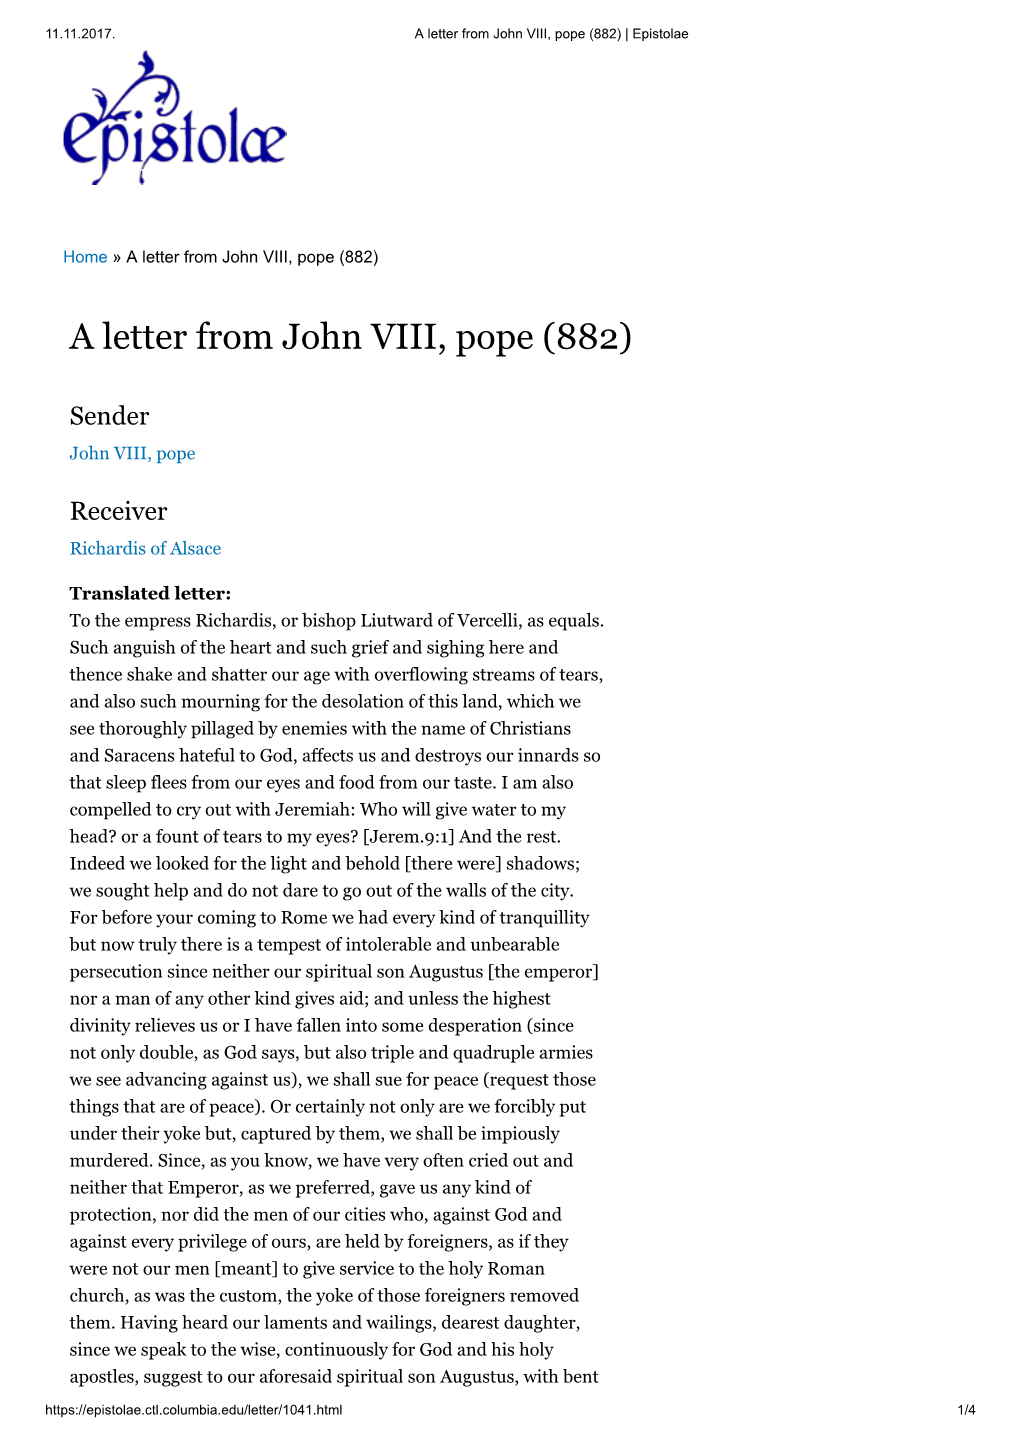 A Letter from John VIII, Pope (882) | Epistolae